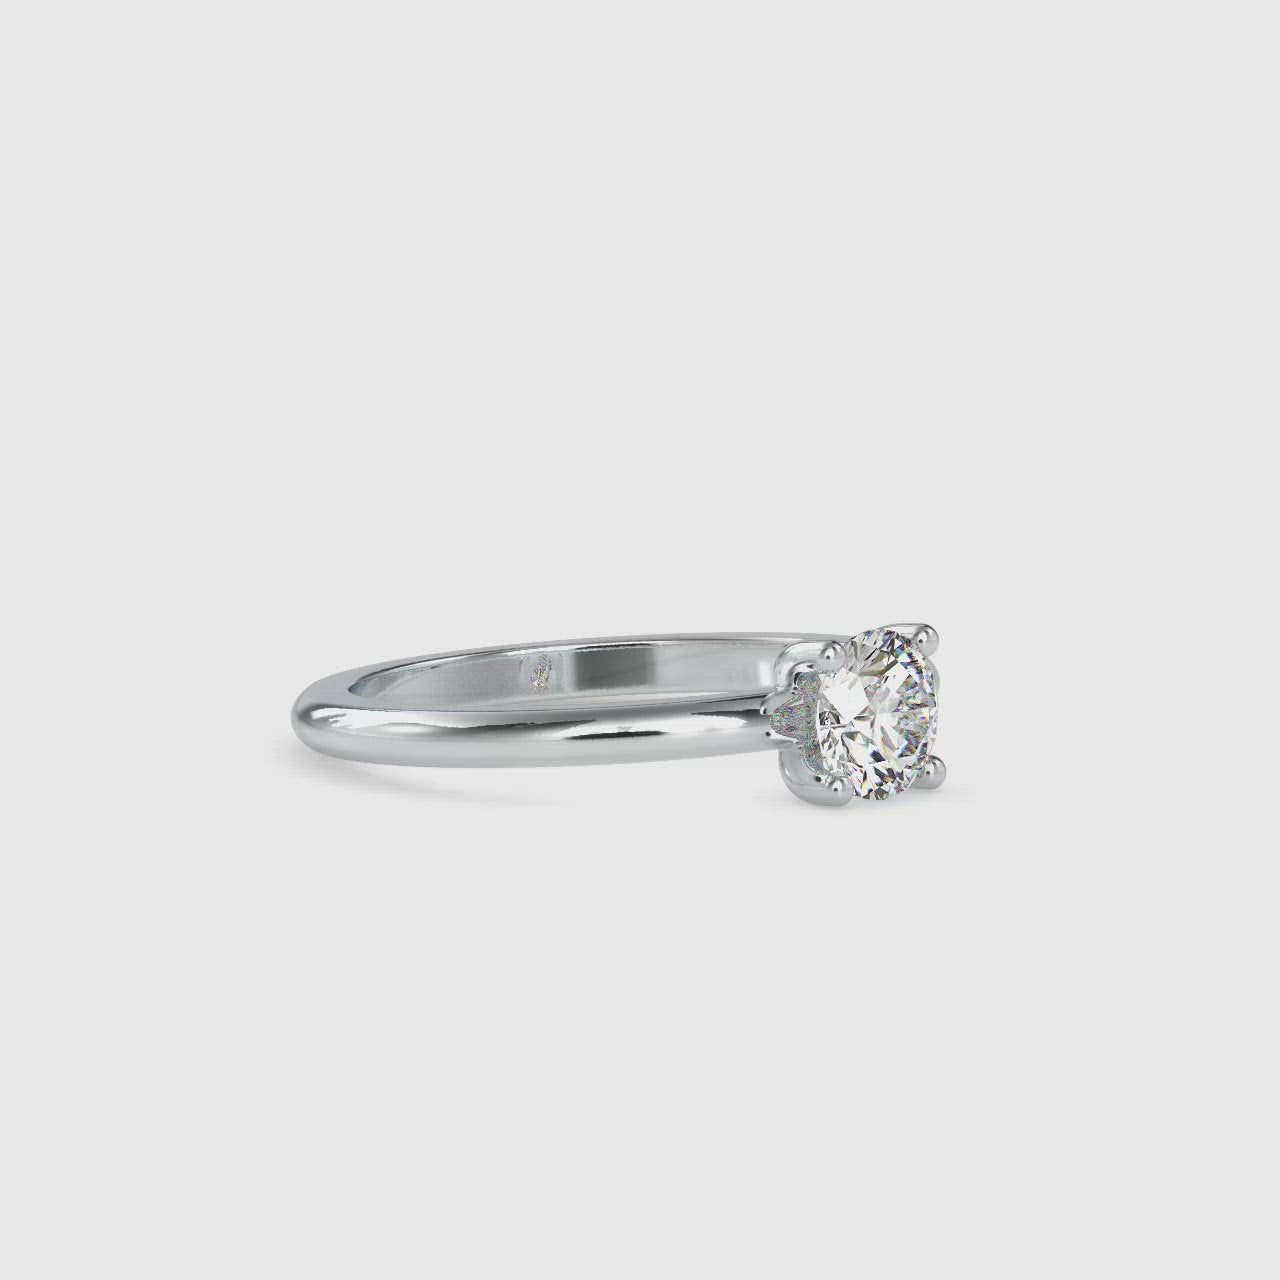 The Caprotina Ring - Vai Ra moissanite diamond